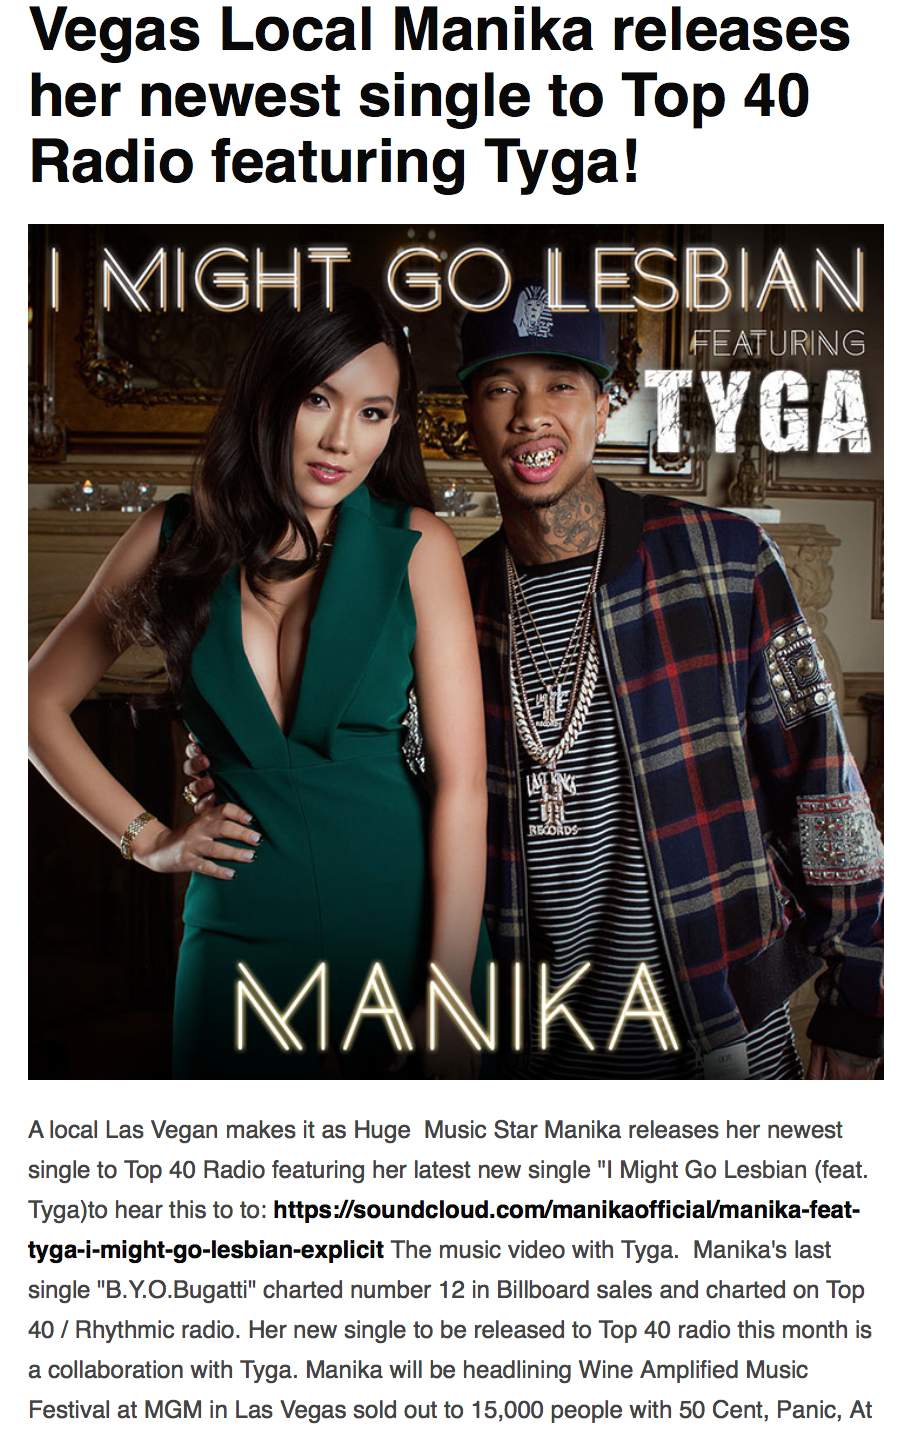 Vegas Scene Magazine Features Manika and Tyga